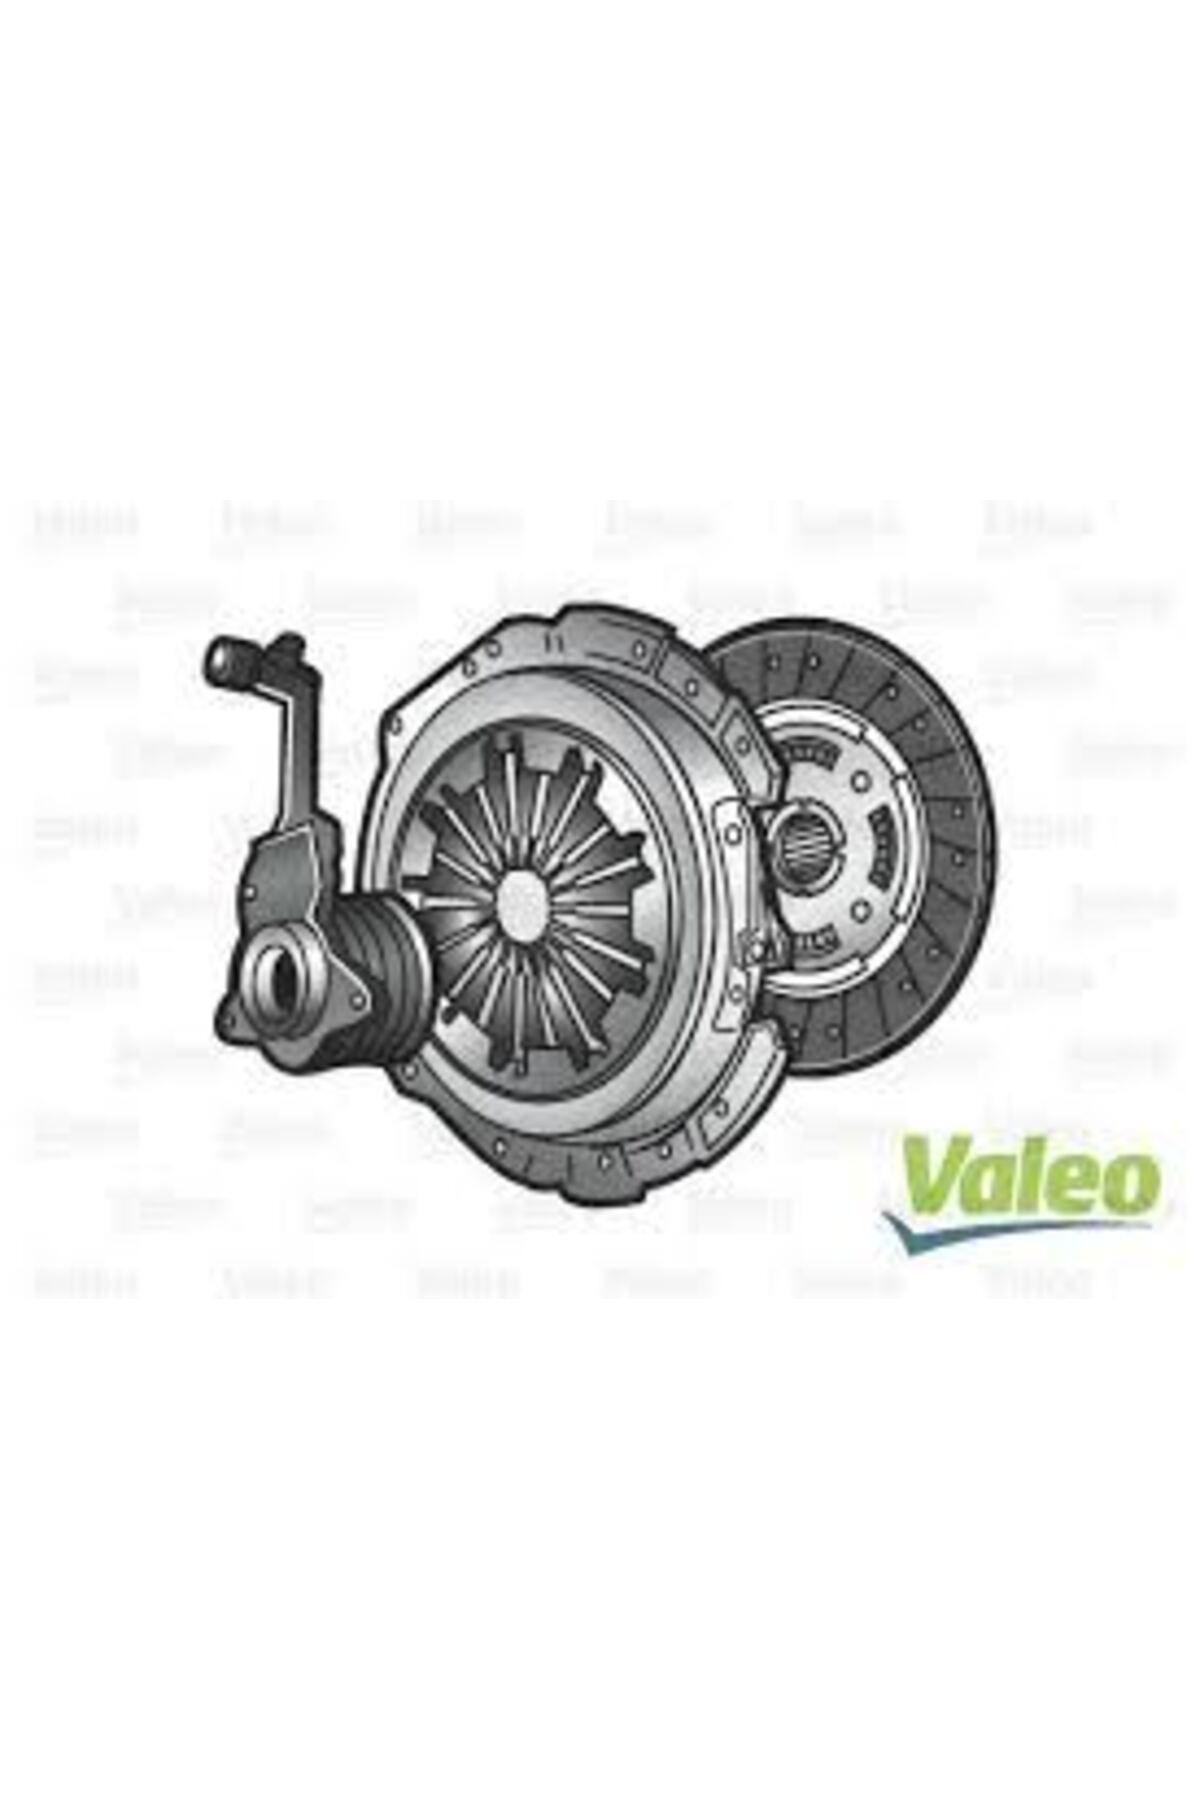 Valeo 3 Lü Debriyaj Takımı Baskı Disk Hidrolik Rulman Opel Astra. Merıva. Zafıra 1 6 0611 0152506101-01625